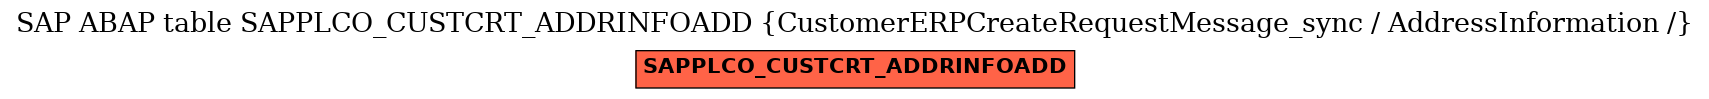 E-R Diagram for table SAPPLCO_CUSTCRT_ADDRINFOADD (CustomerERPCreateRequestMessage_sync / AddressInformation /)